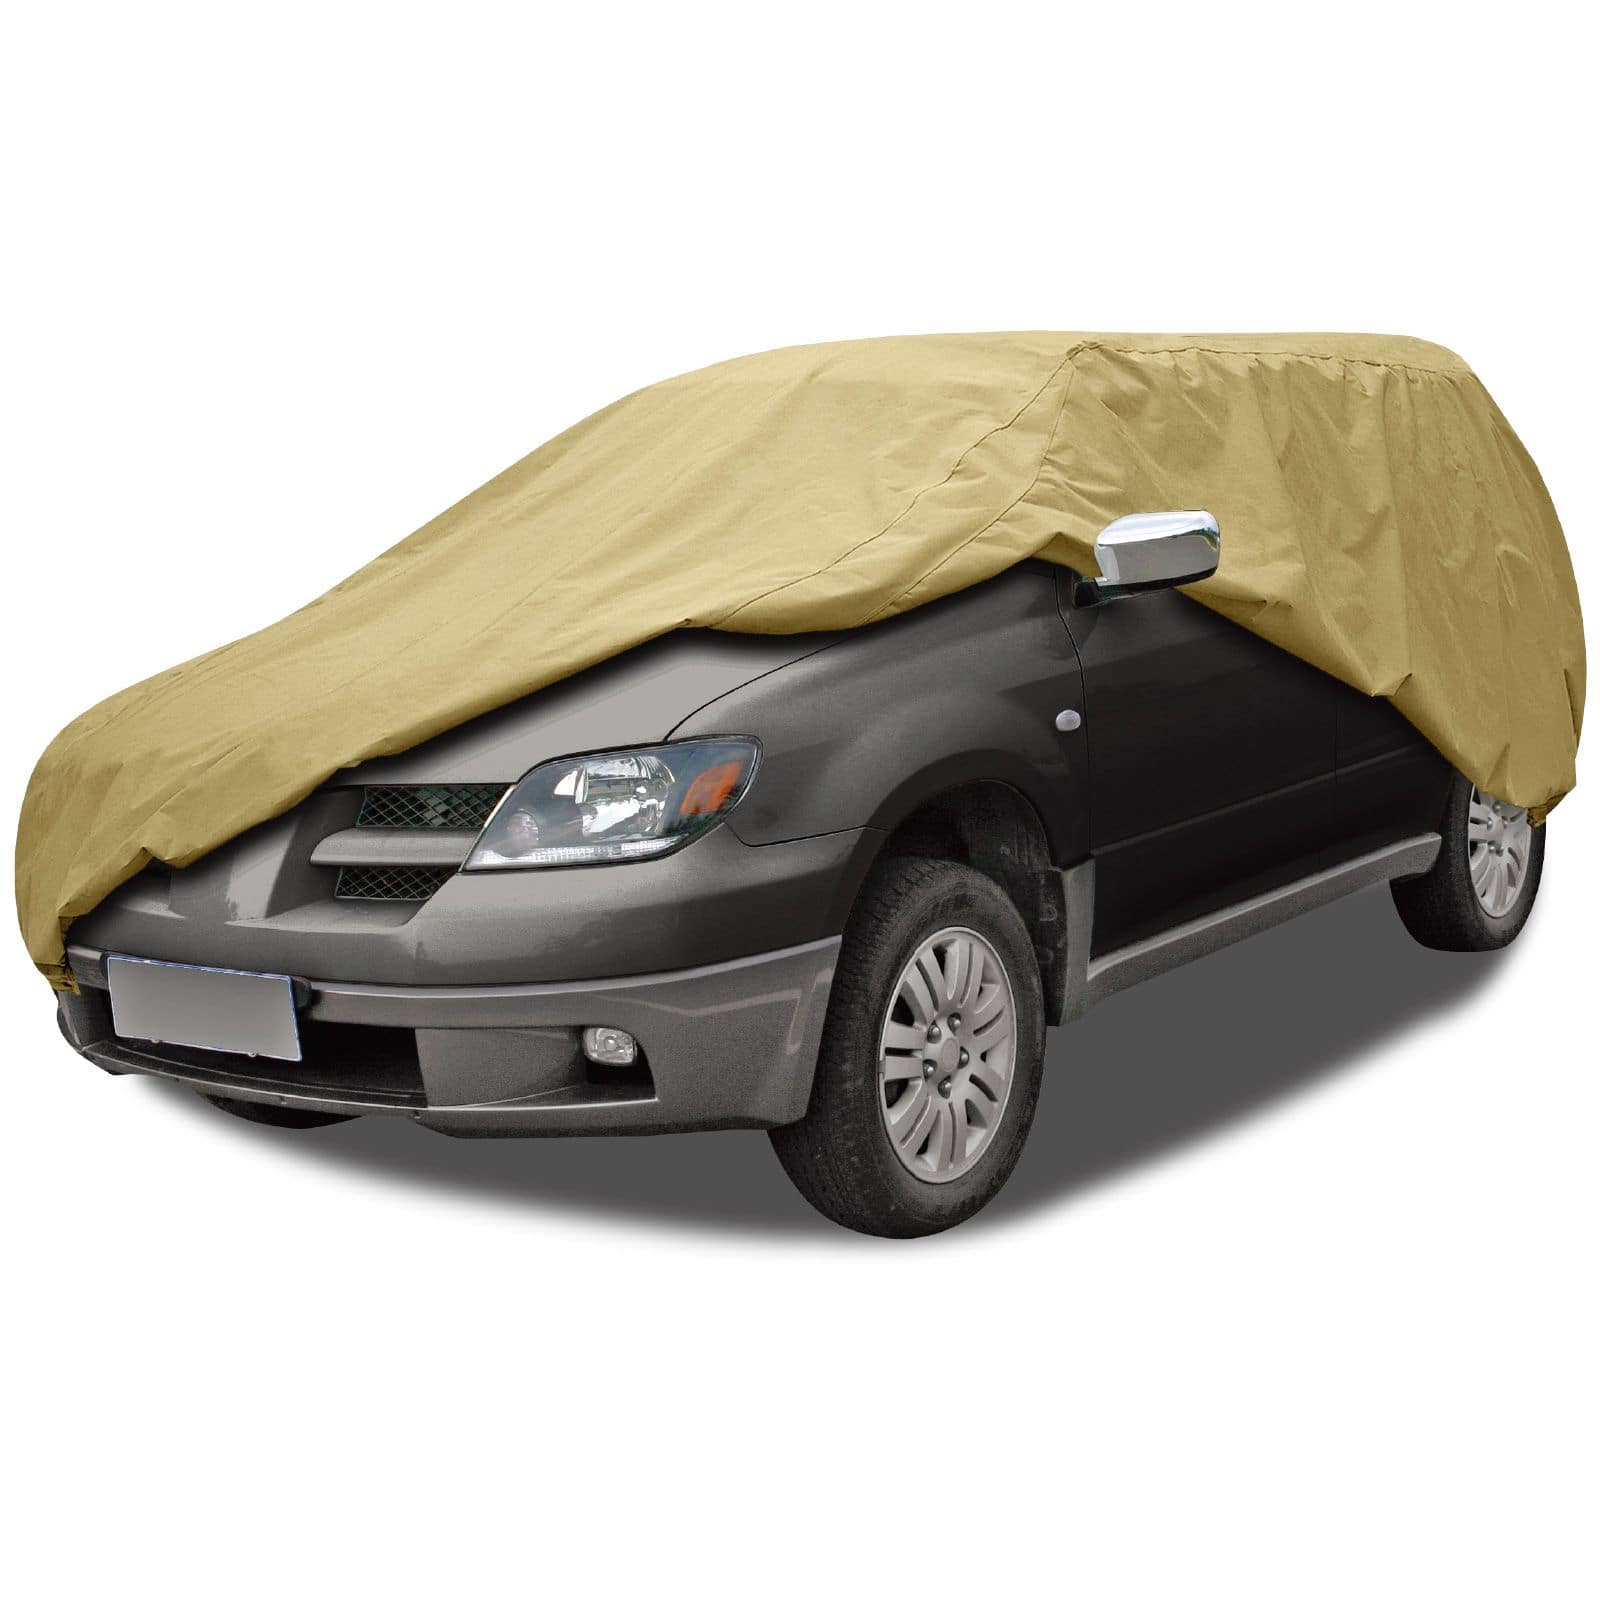 Outdoor Car Shield™ (outdoor car cover protection)